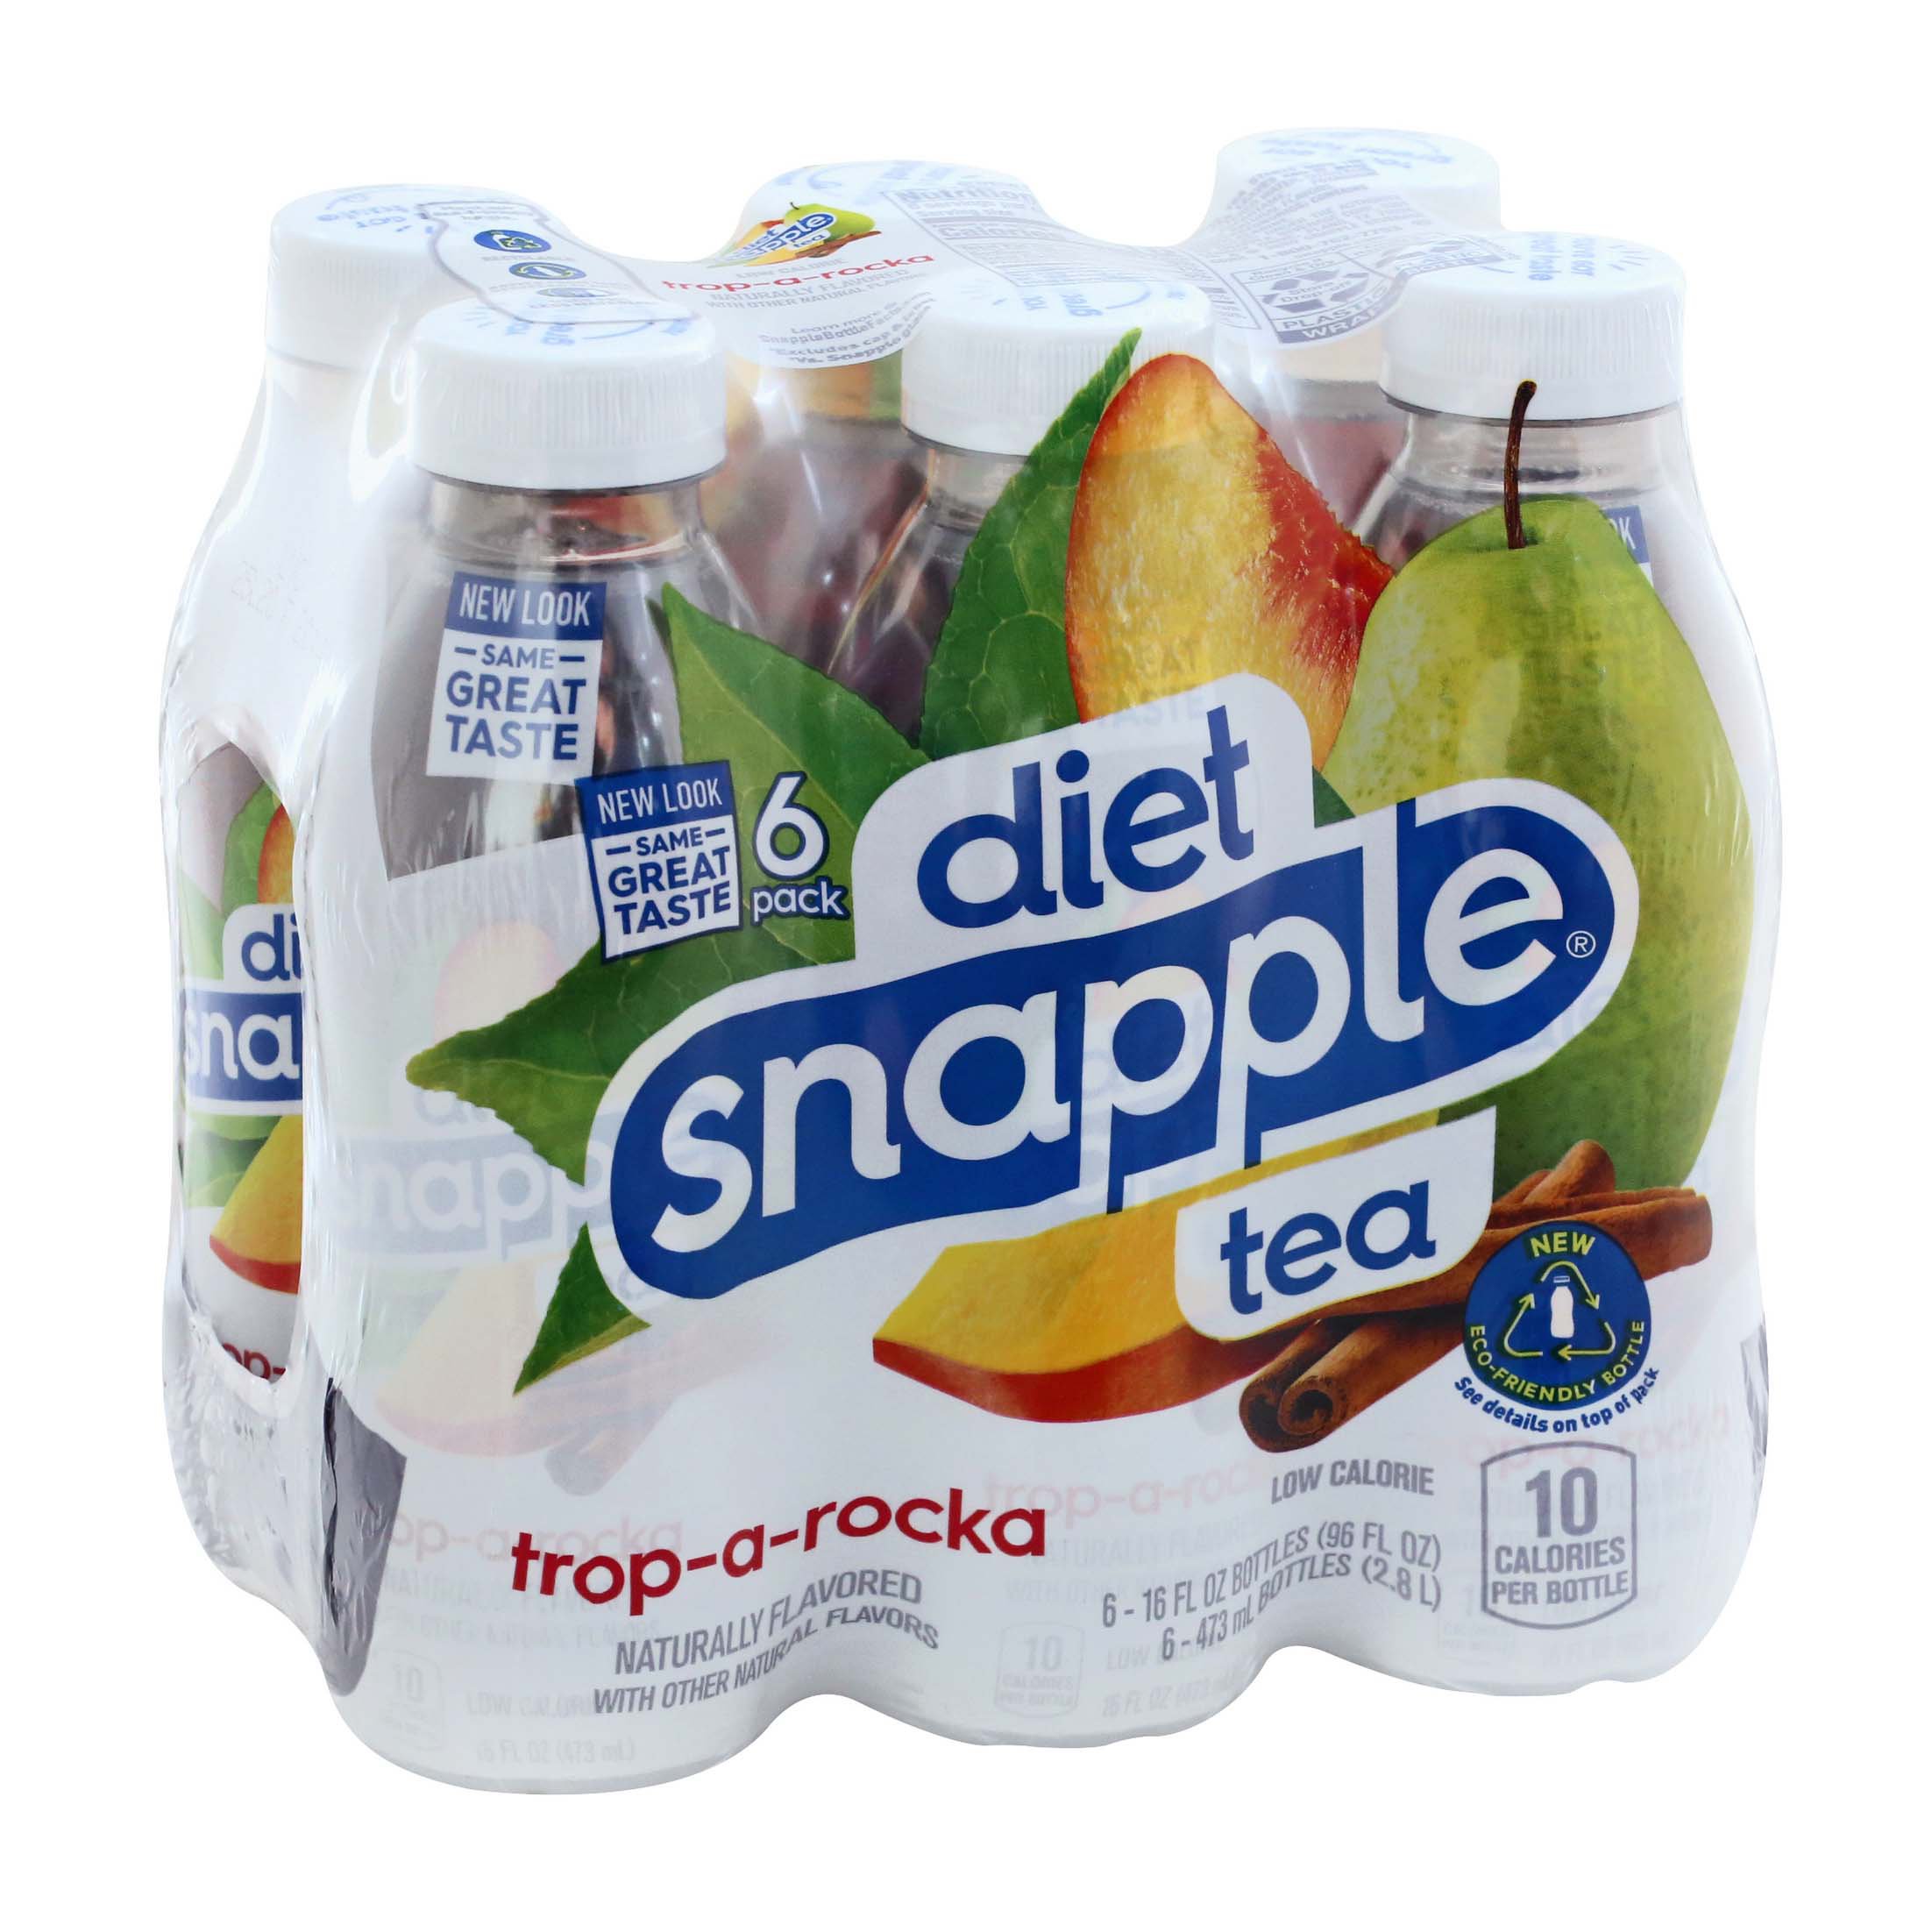 Snapple Diet Snapple Trop A Rocka Tea 16 Oz Bottles Shop Tea At H E B